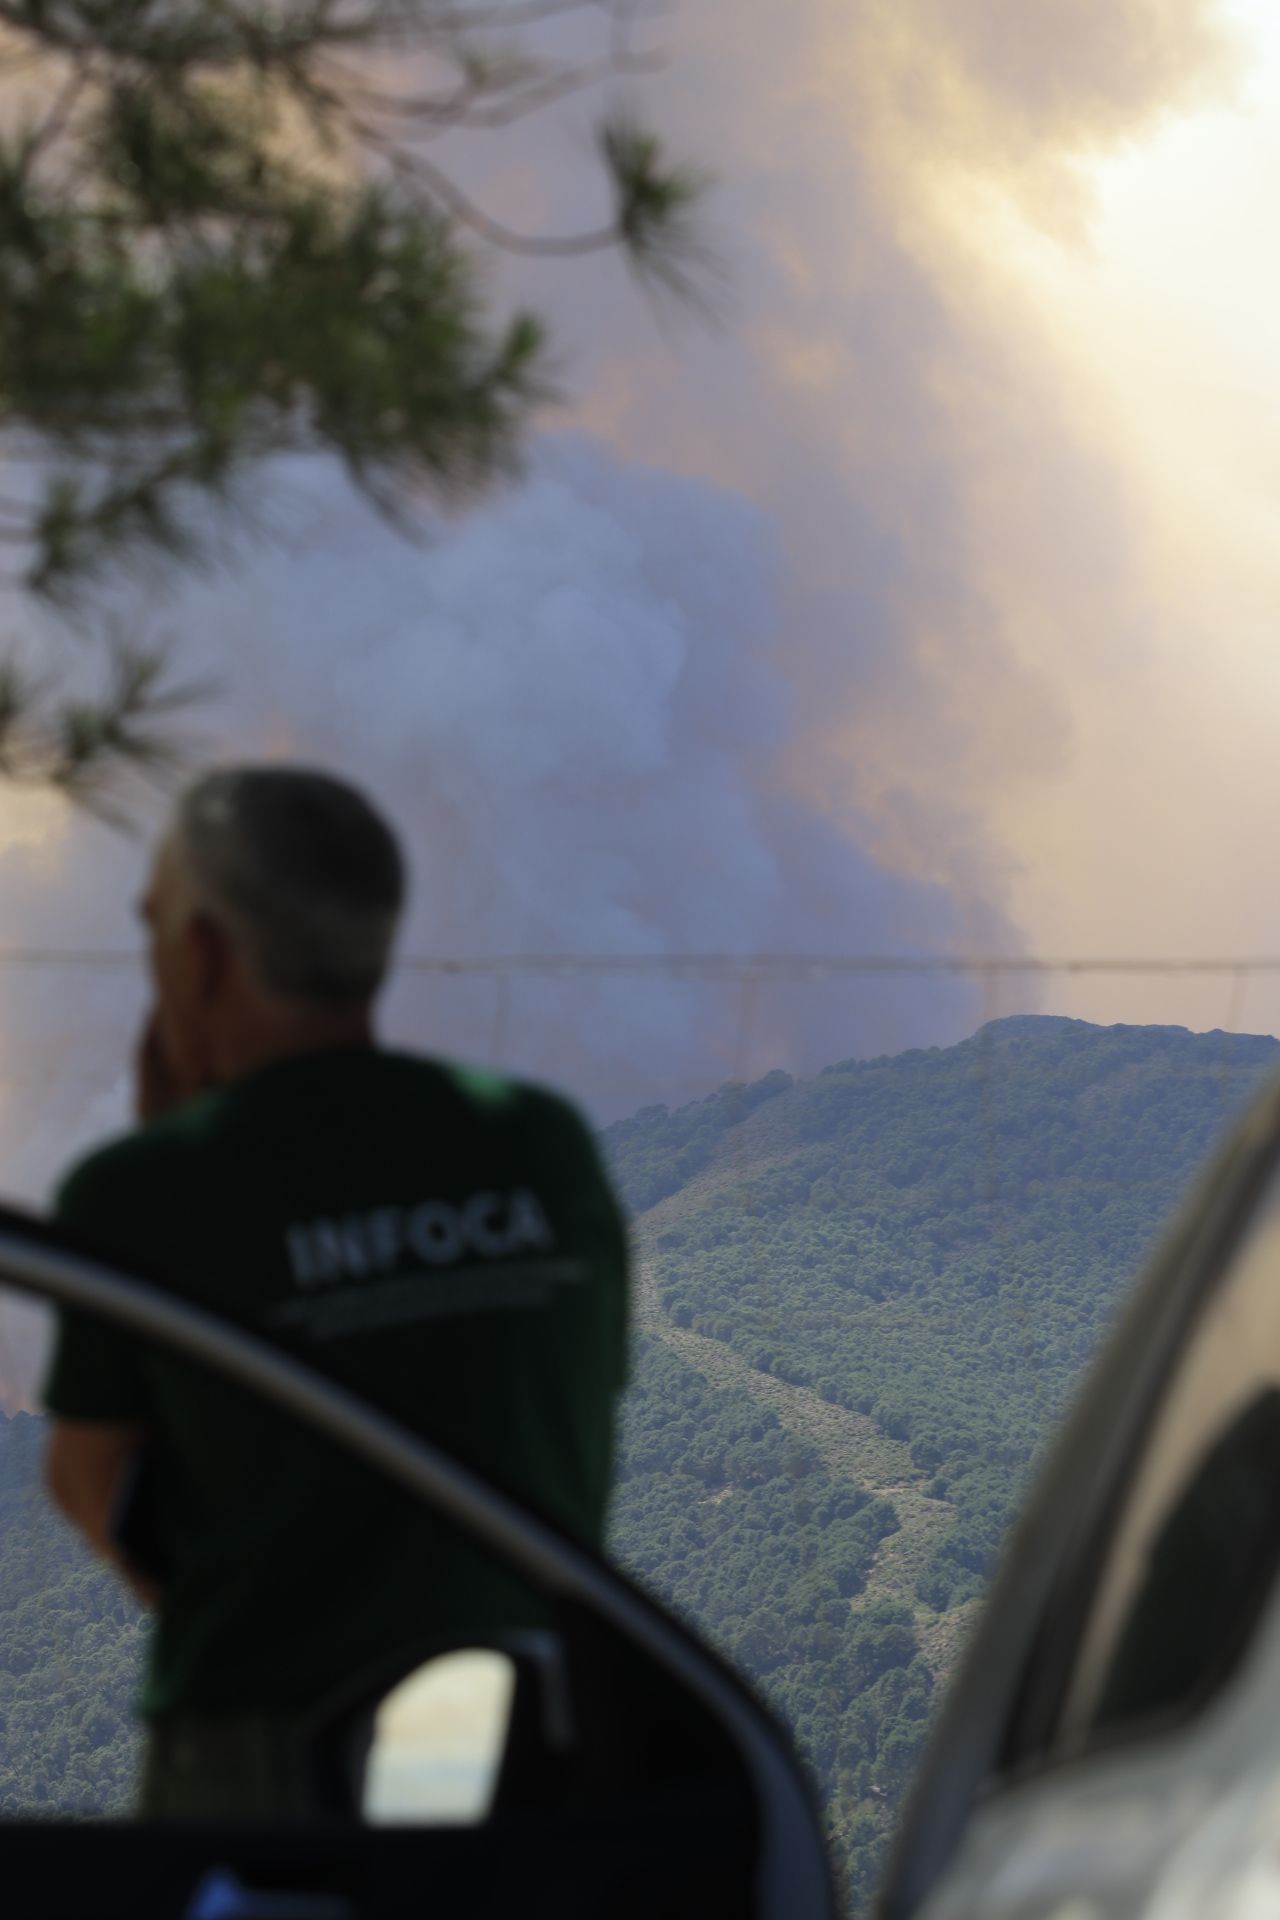 Incendio en Sierra Bermeja iniciado en Pujerra